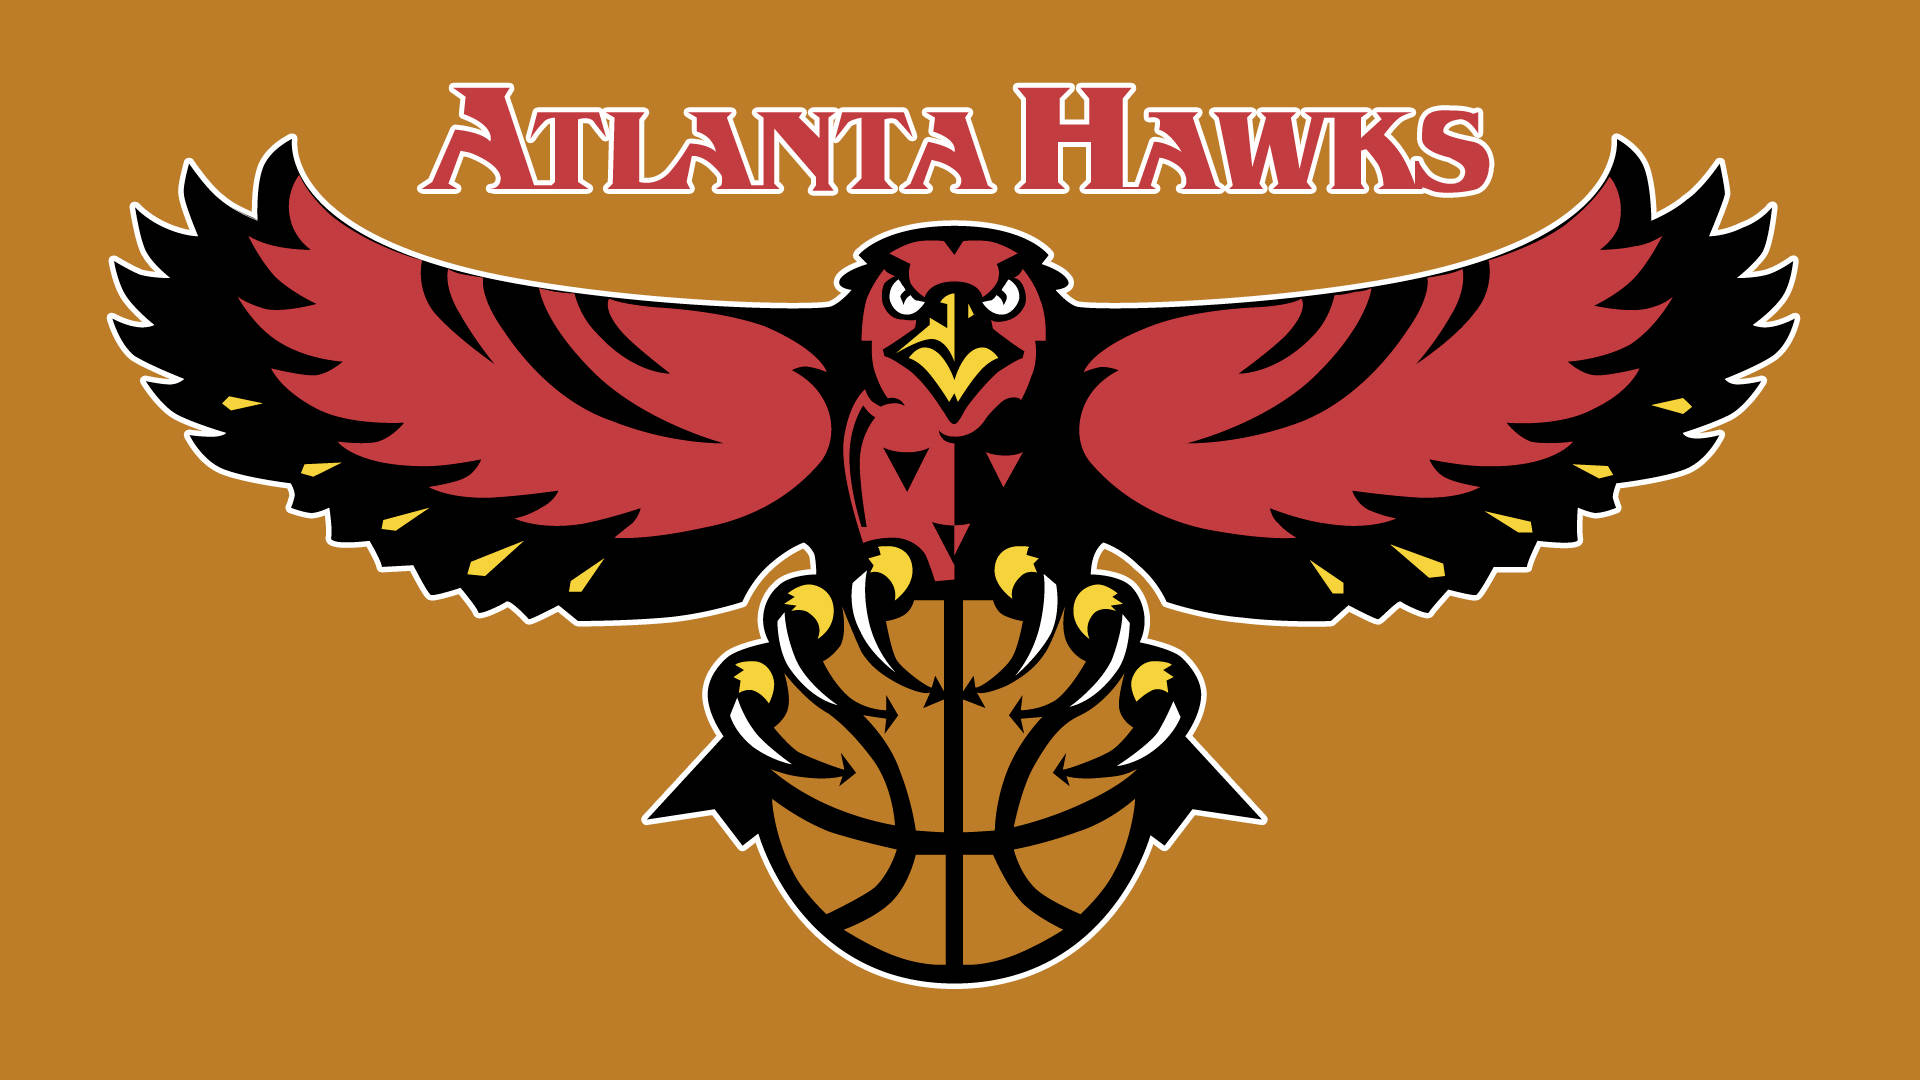 [100+] Atlanta Hawks Pictures